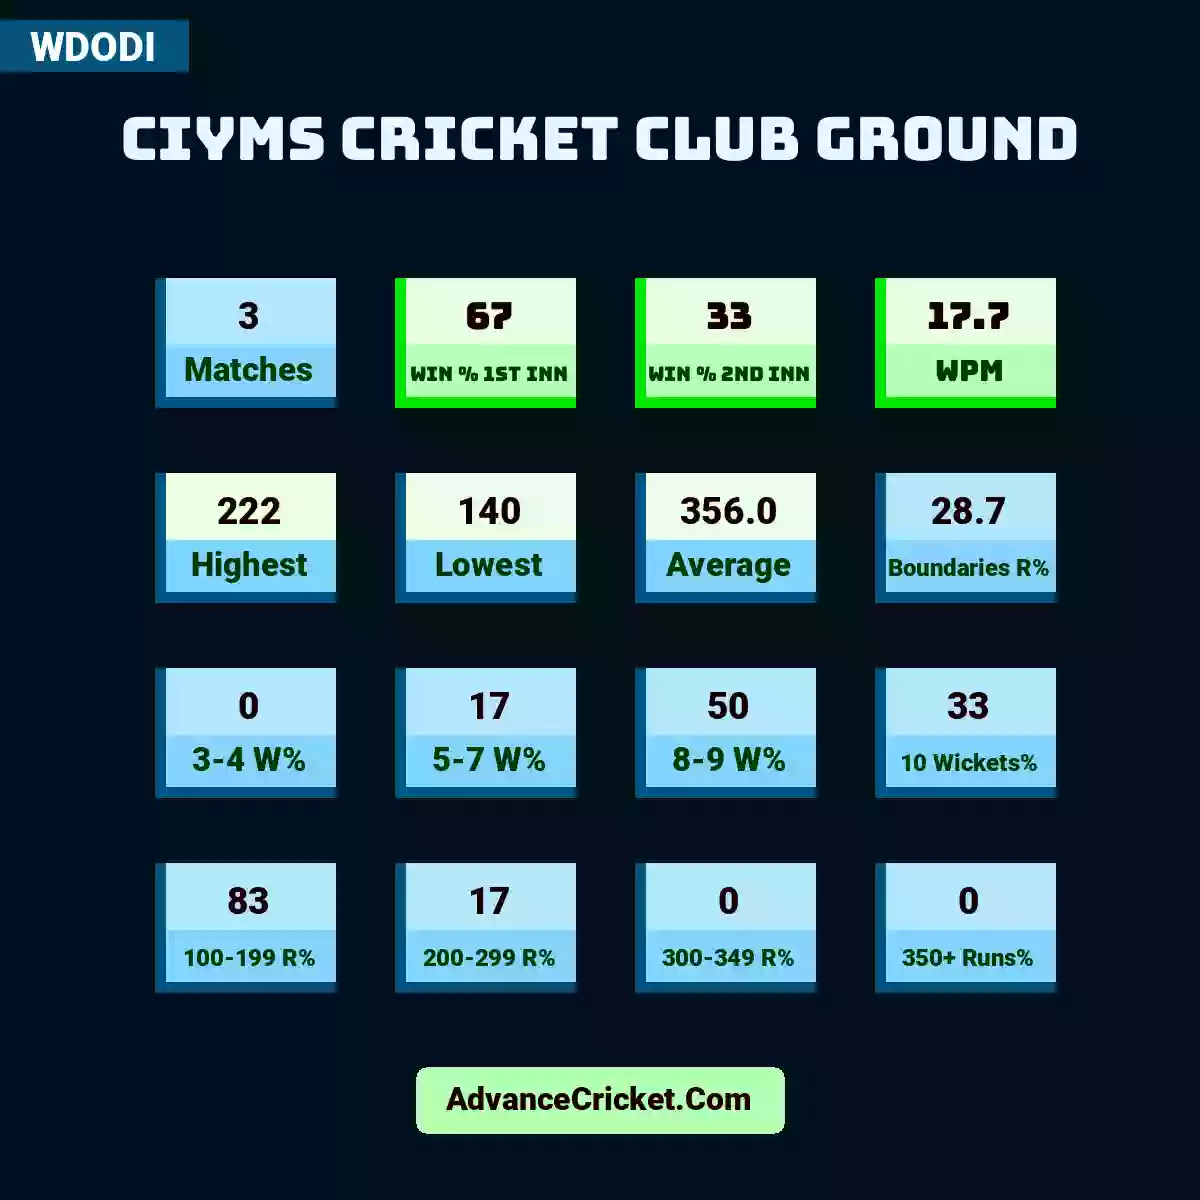 Image showing CIYMS Cricket Club Ground WDODI with Matches: 1, Win % 1st Inn: 100, Win % 2nd Inn: 0, WPM: 19, Highest: 184, Lowest: 163, Average: 347.0, Boundaries R%: 23.6, 3-4 W%: 0, 5-7 W%: 0, 8-9 W%: 50, 10 Wickets%: 50, 100-199 R%: 100, 200-299 R%: 0, 300-349 R%: 0, 350+ Runs%: 0.